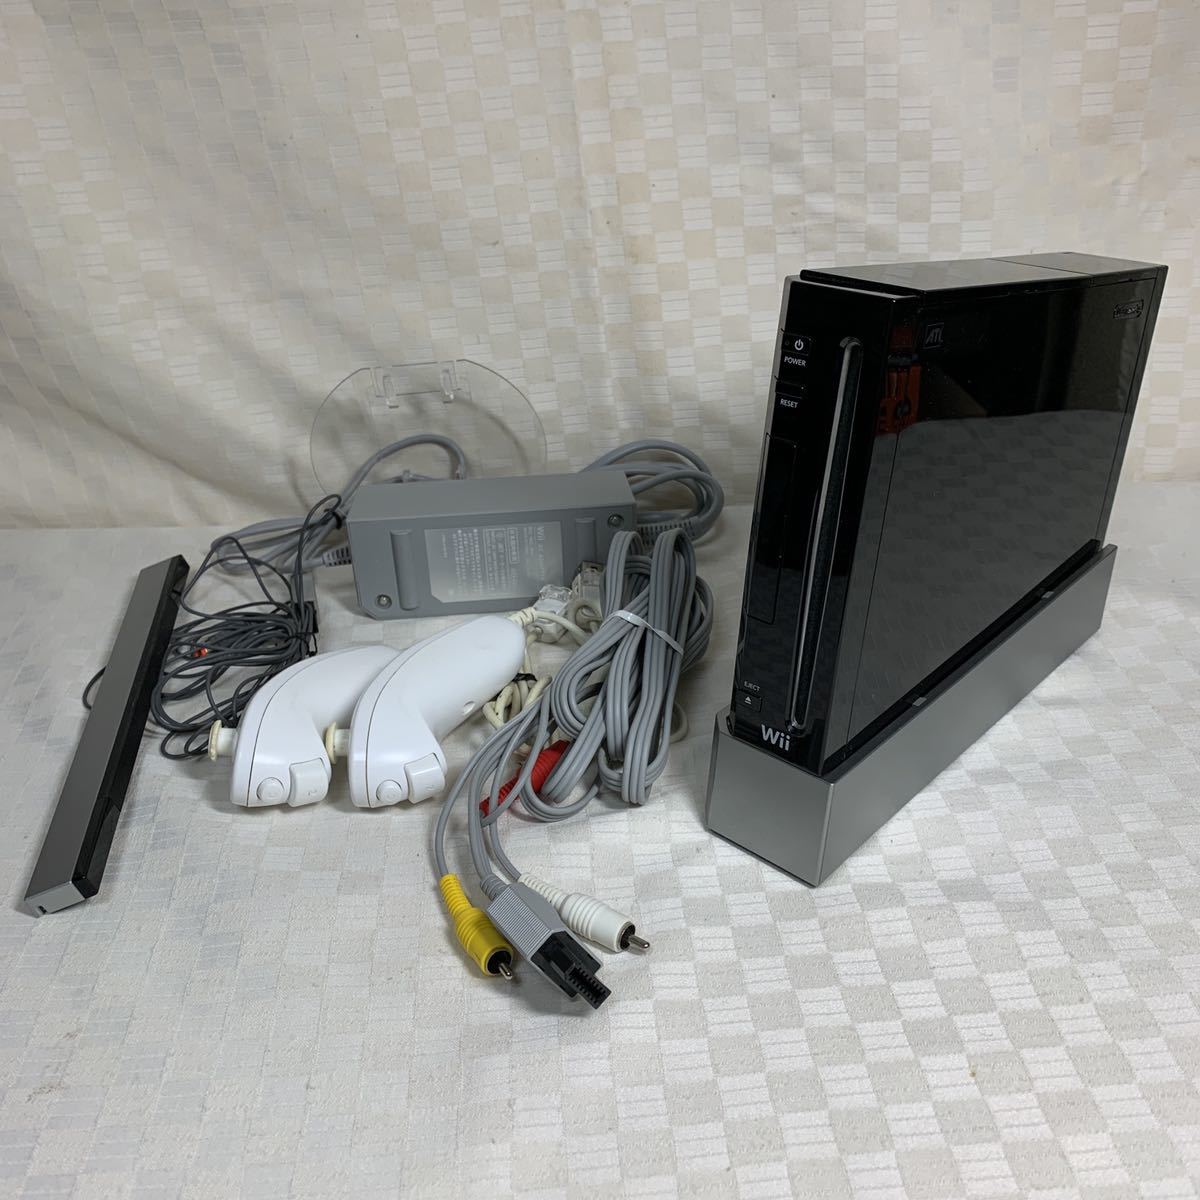 Nintendo任天堂Wii RVL-001(JPN) コントローラ無し,台,電源コード,センサーバー,AVコード,ヌンチャクx2